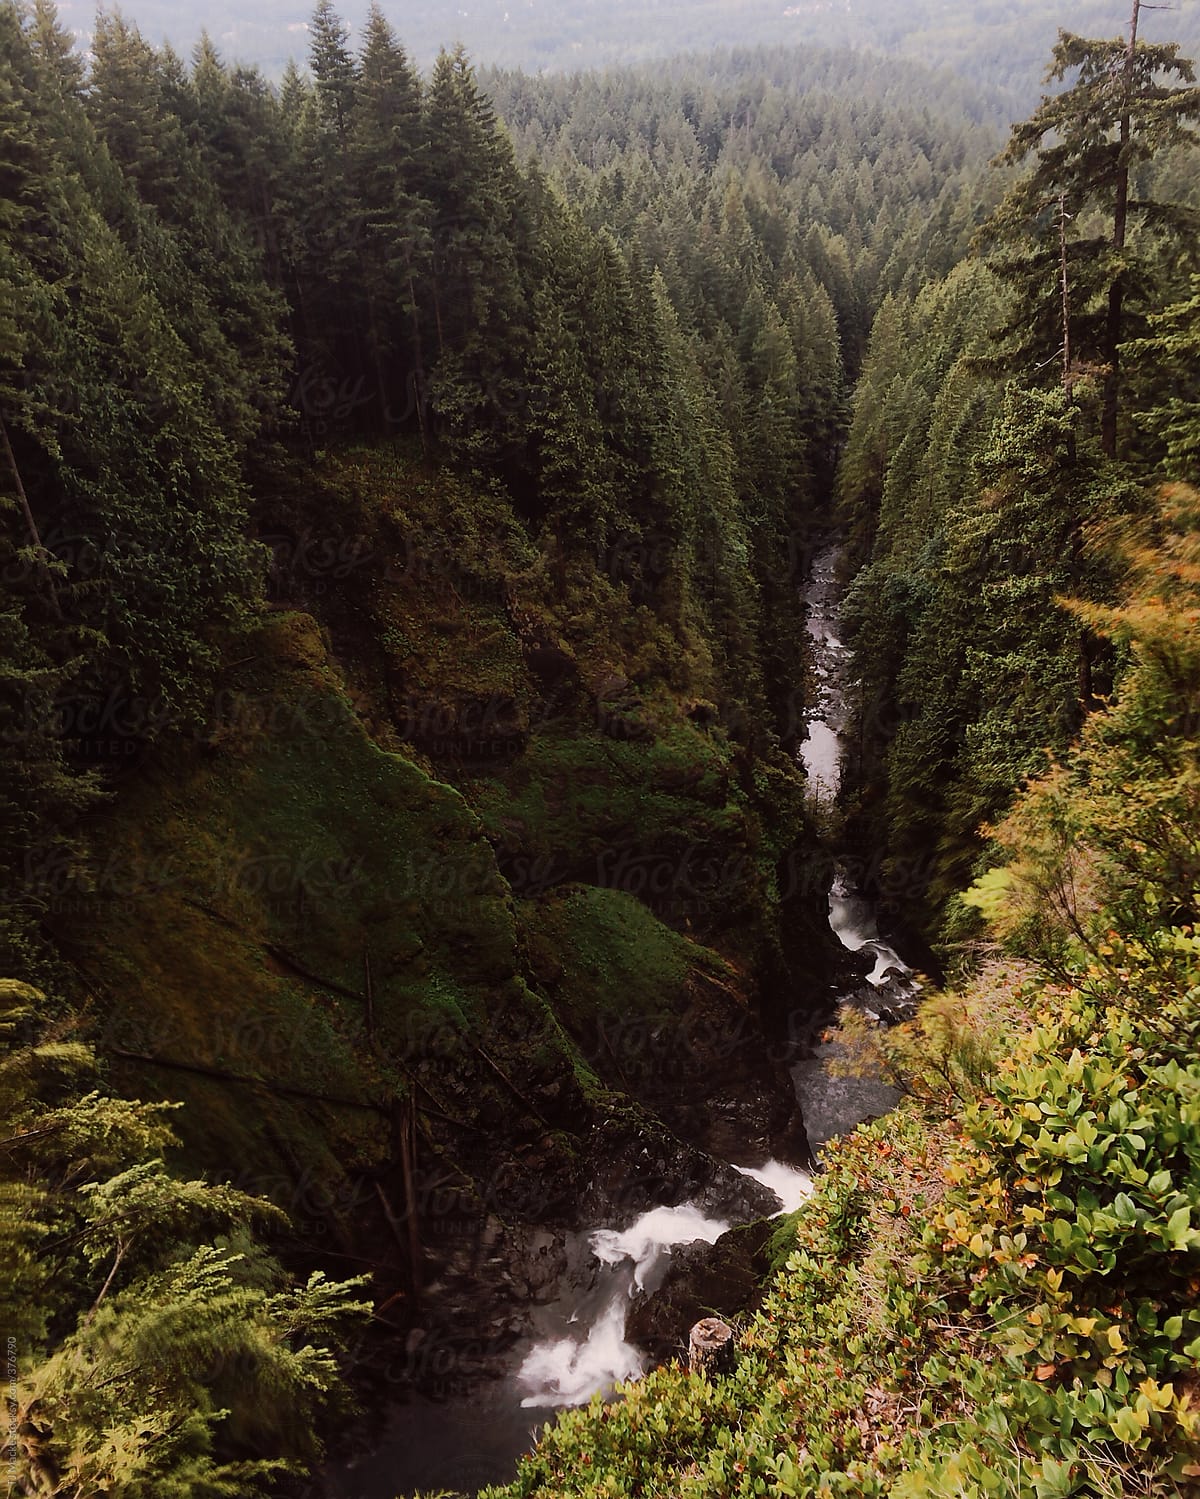 rapids rushing through forest during daytime